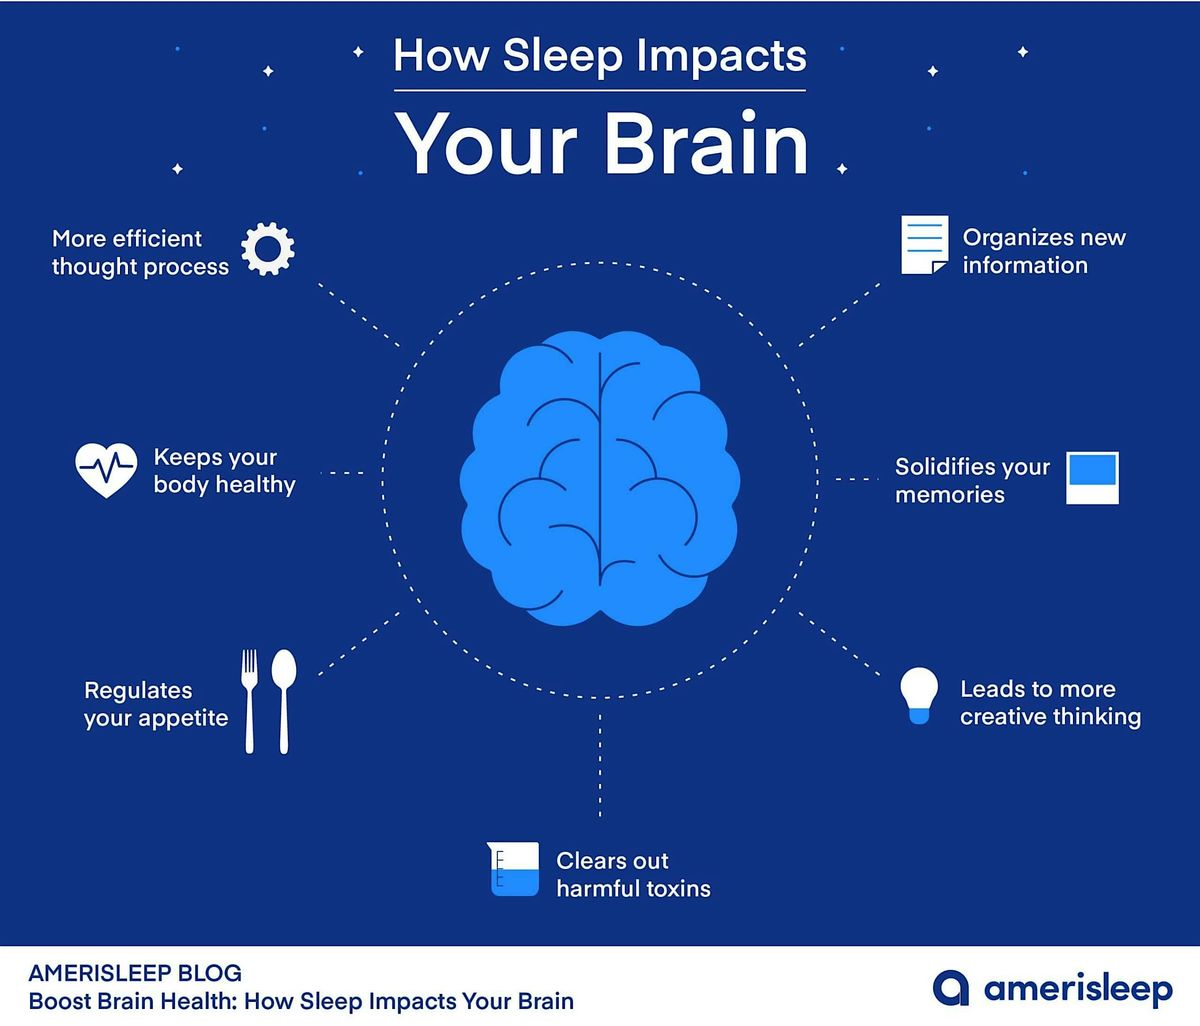 Our brains during sleep